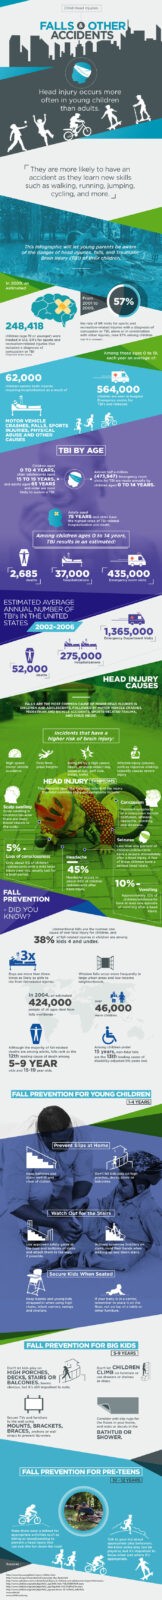 child head injuries infographic